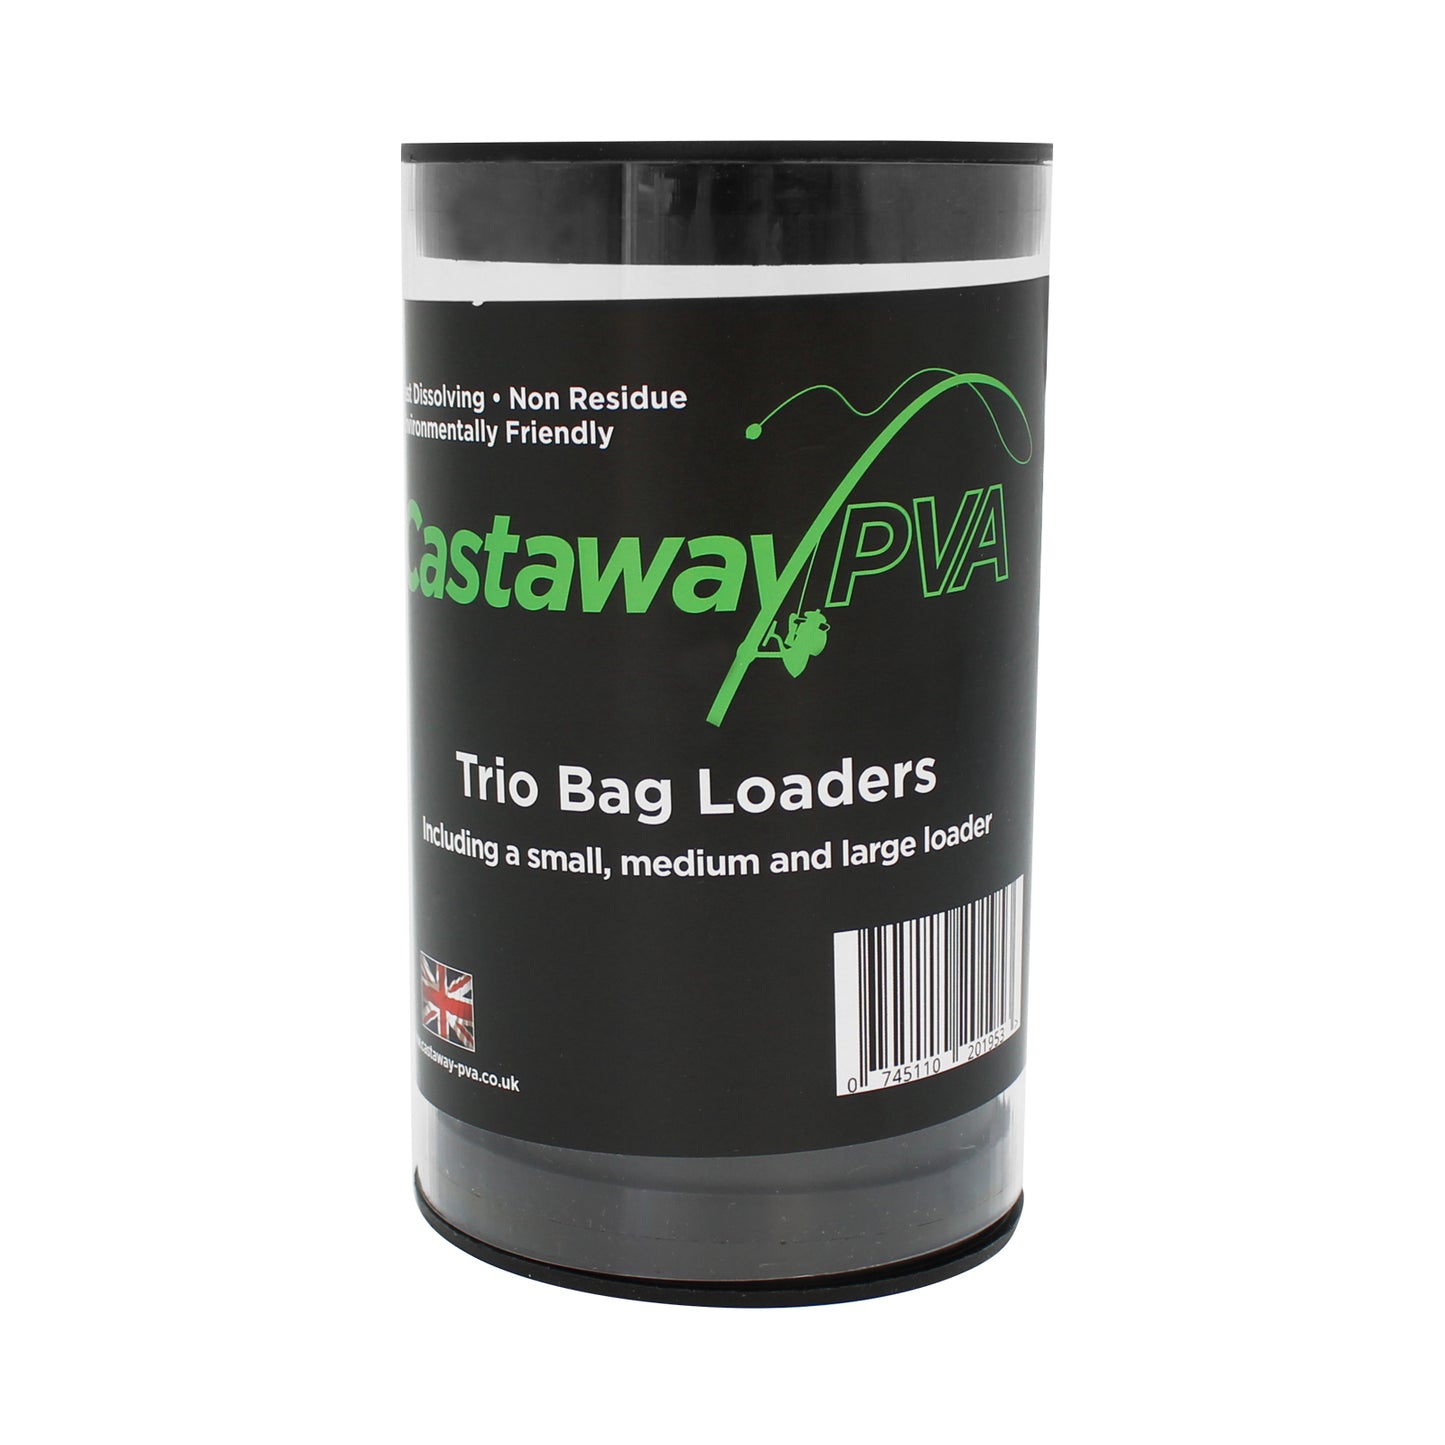 Castaway PVA Trio Bag Loaders in Storage Tube